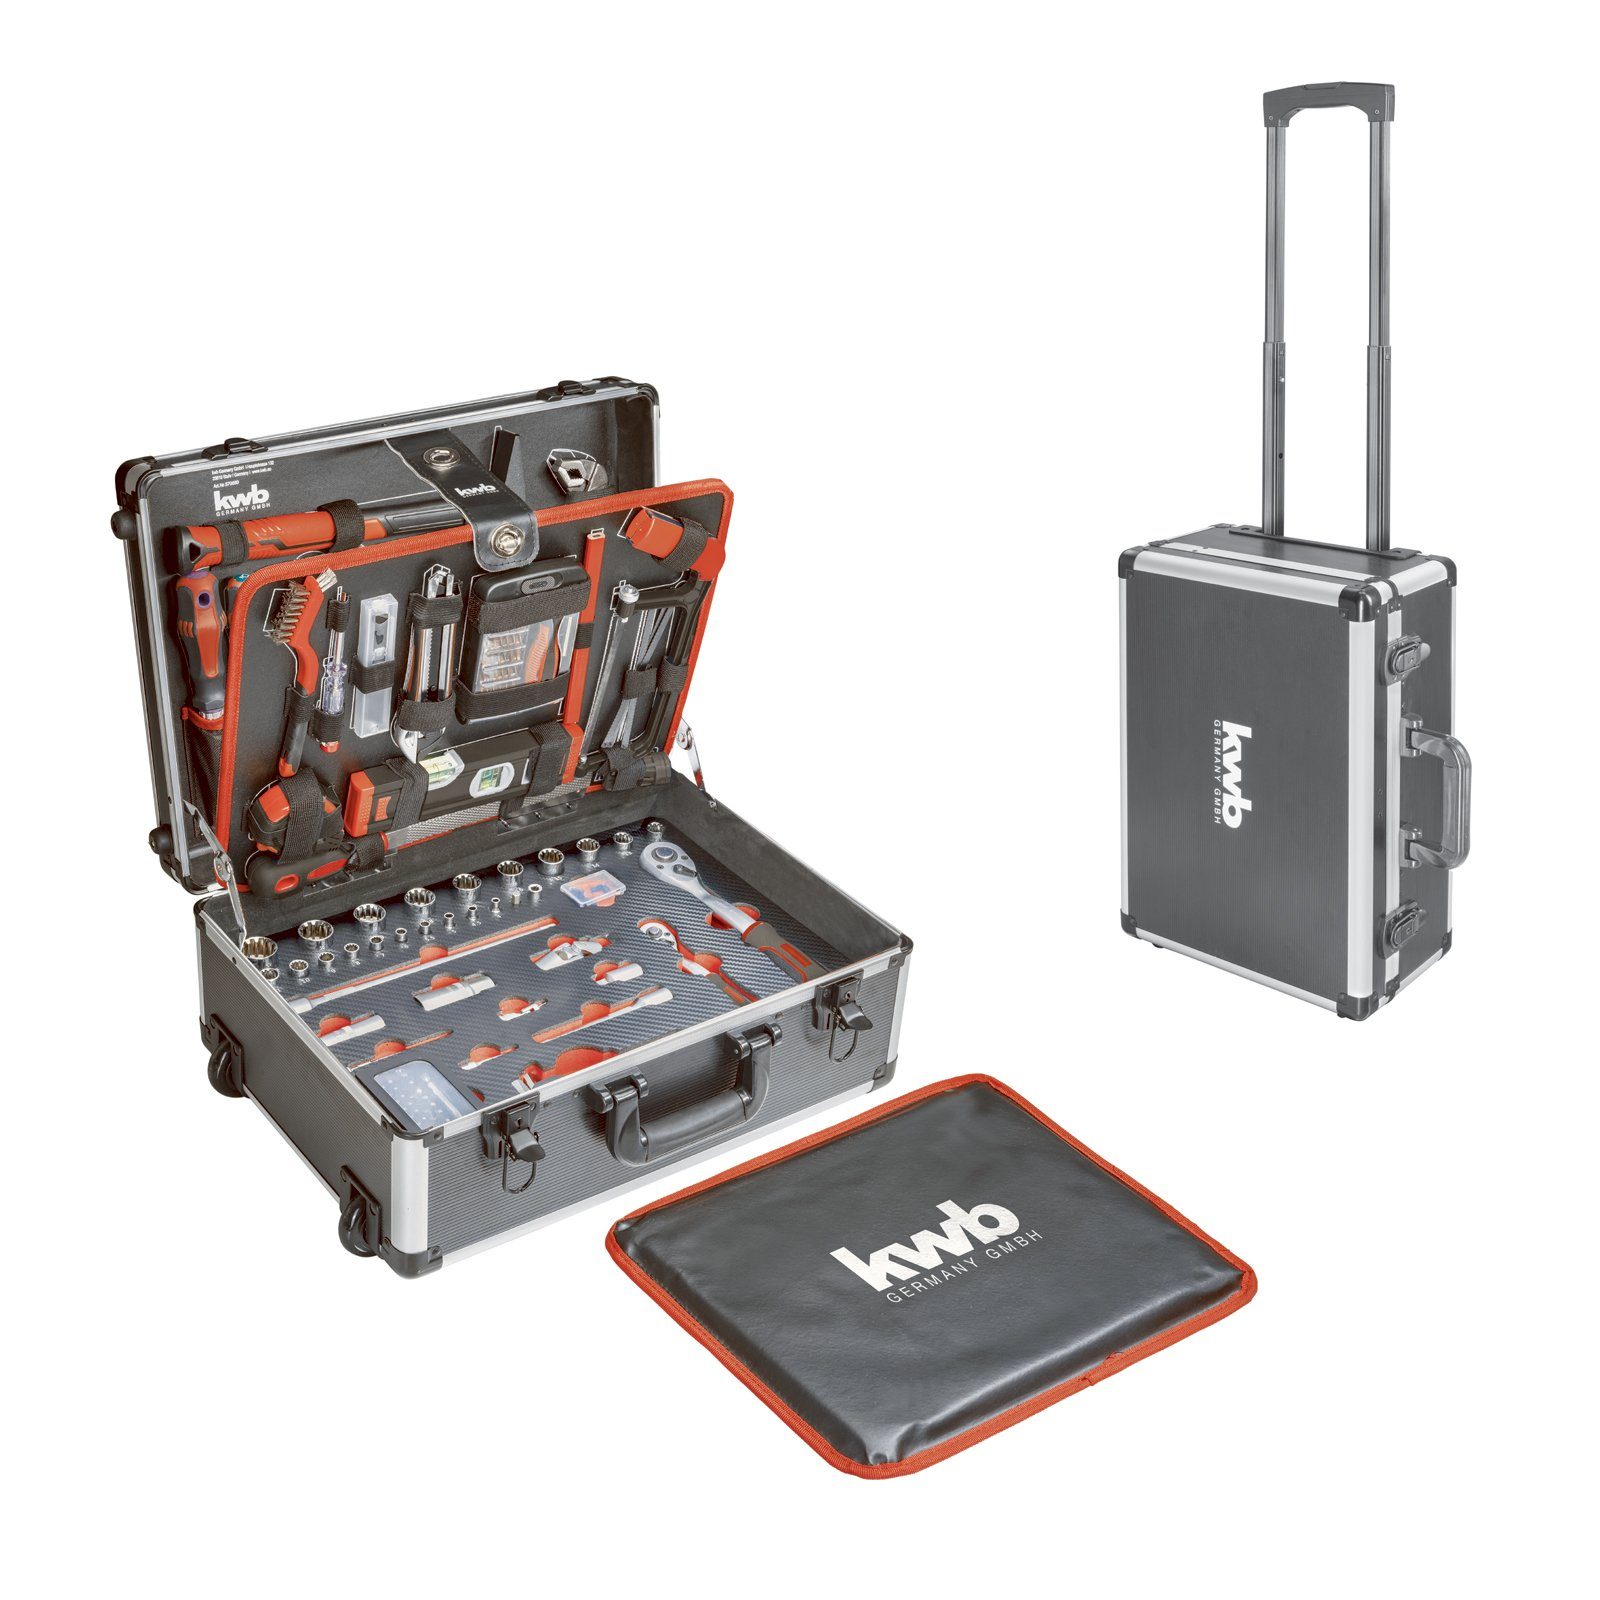 kwb kwb gefüllt, Werkzeug-Set, Werkzeug-Koffer inkl. 175 Werkzeugset Trolley (Set) -teilig,